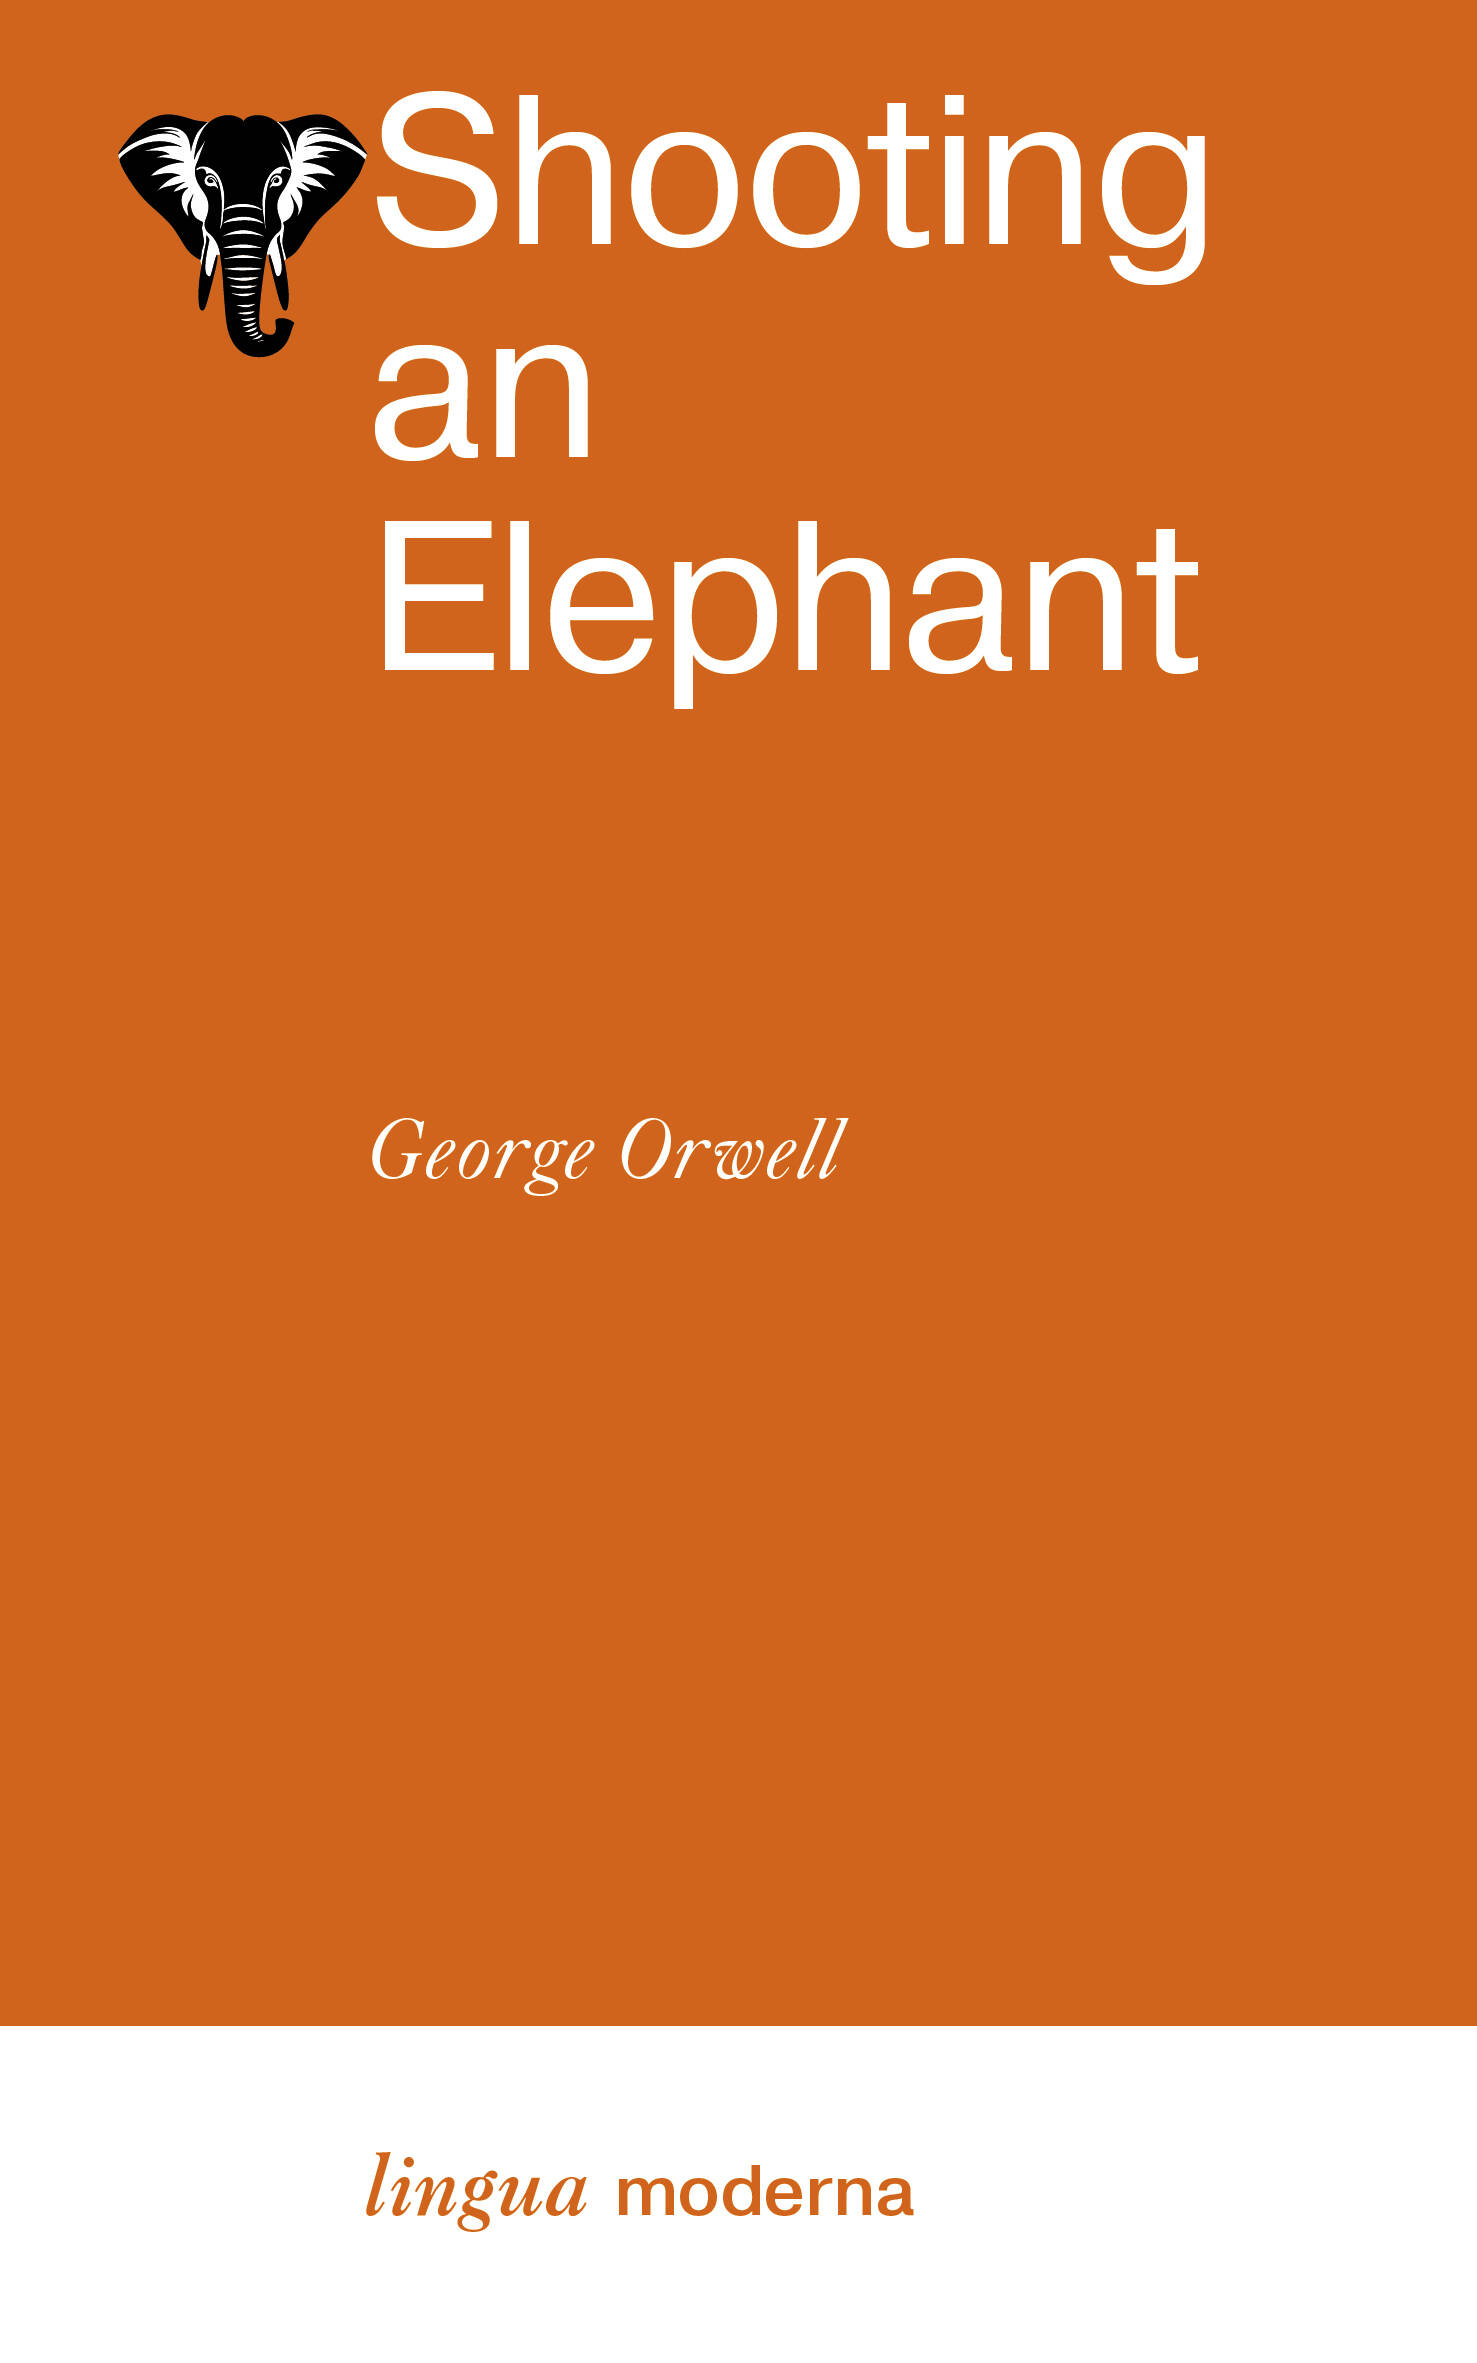 orwell g shooting an elephant Shooting an Elephant